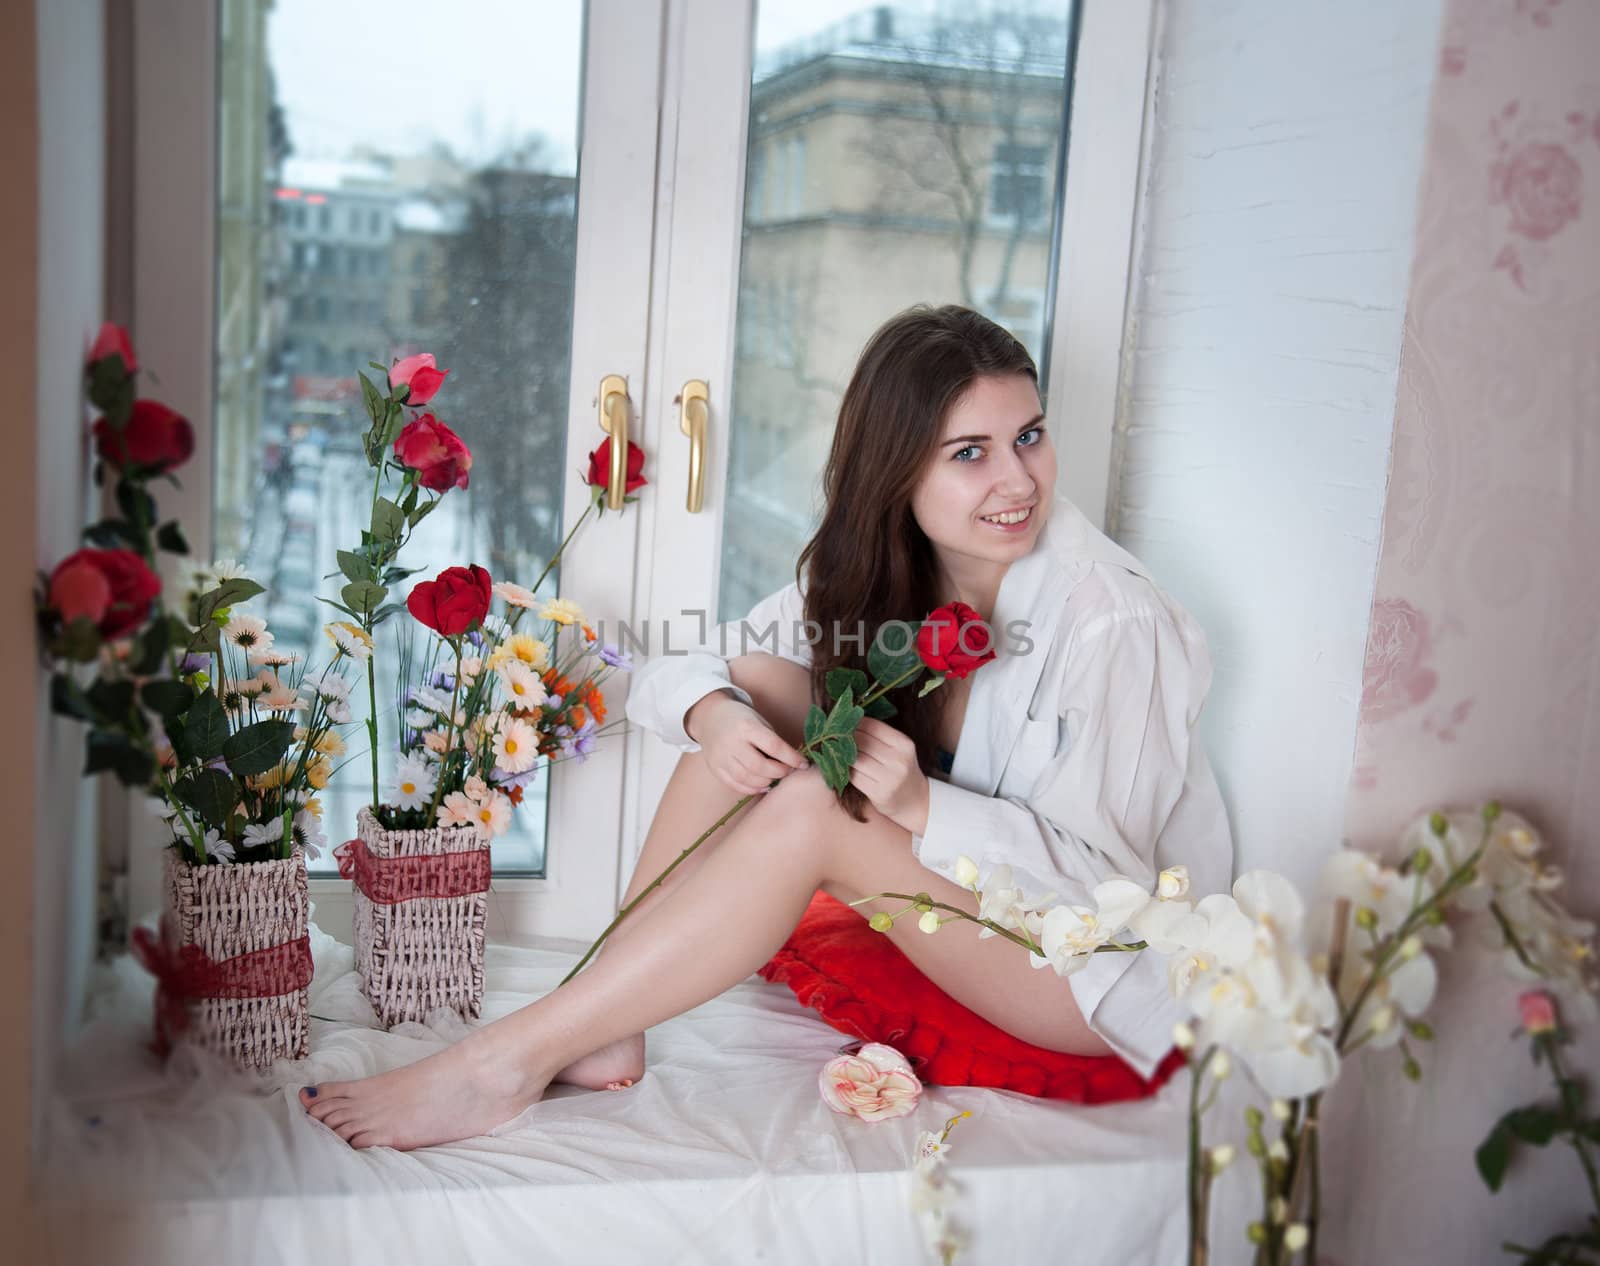  woman in the flowers on the windowsill by raduga21